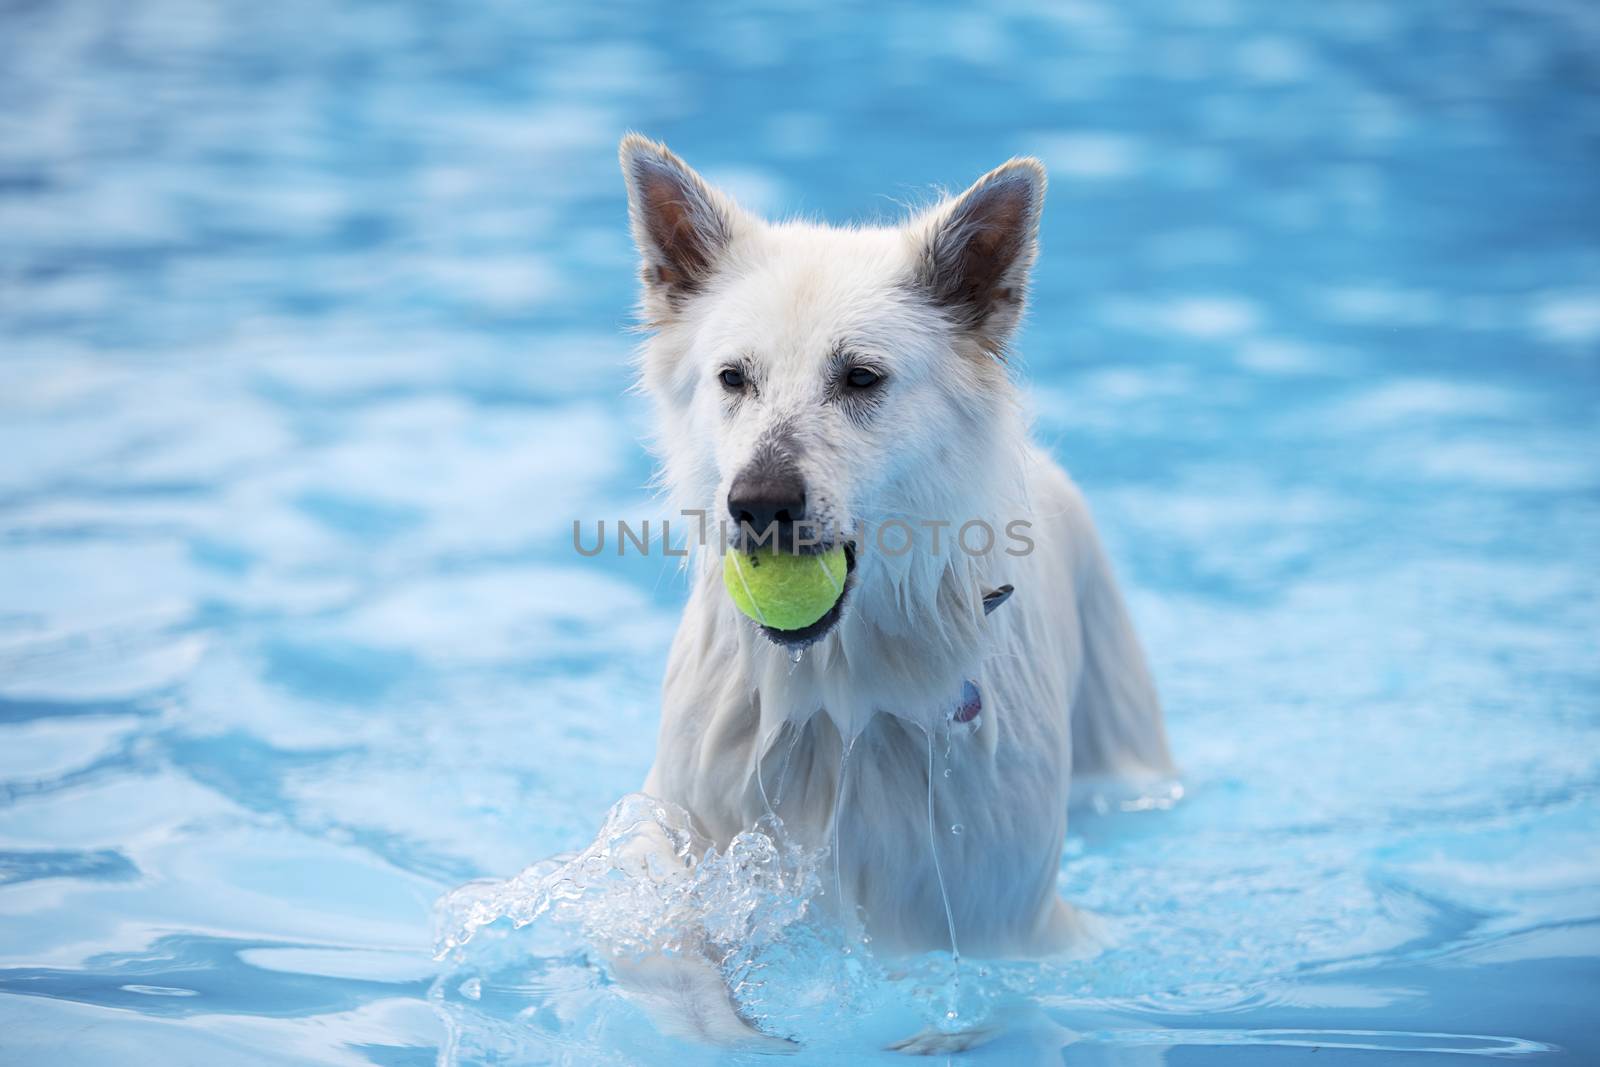 White Shepherd dog, fetching tennis ball in swimming pool by avanheertum